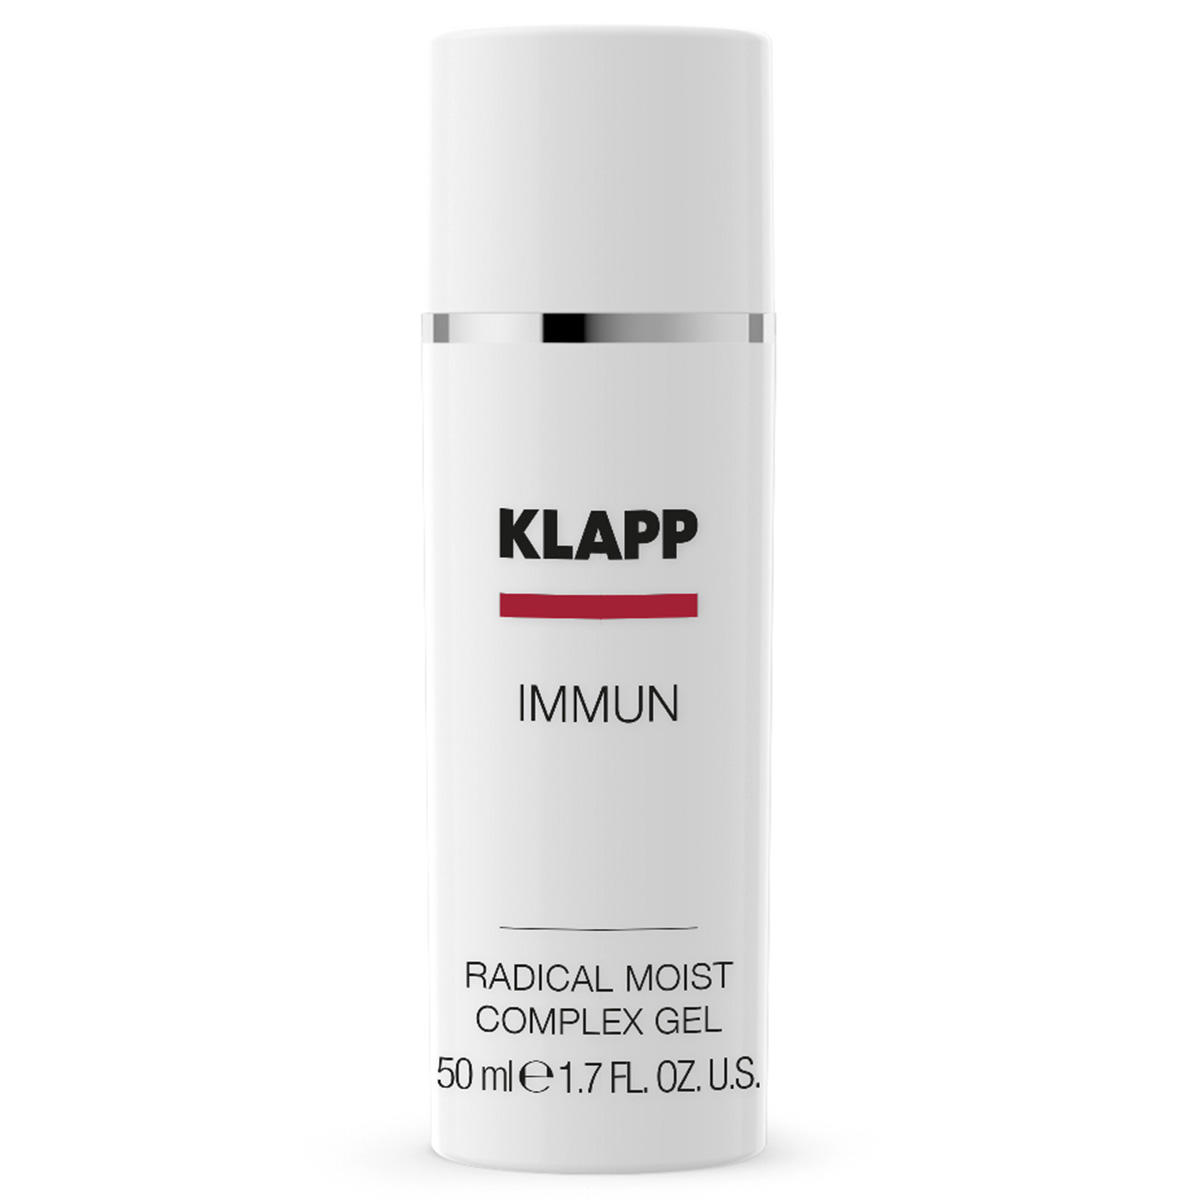 KLAPP IMMUN Radical Moist Complex Gel 50 ml - 1